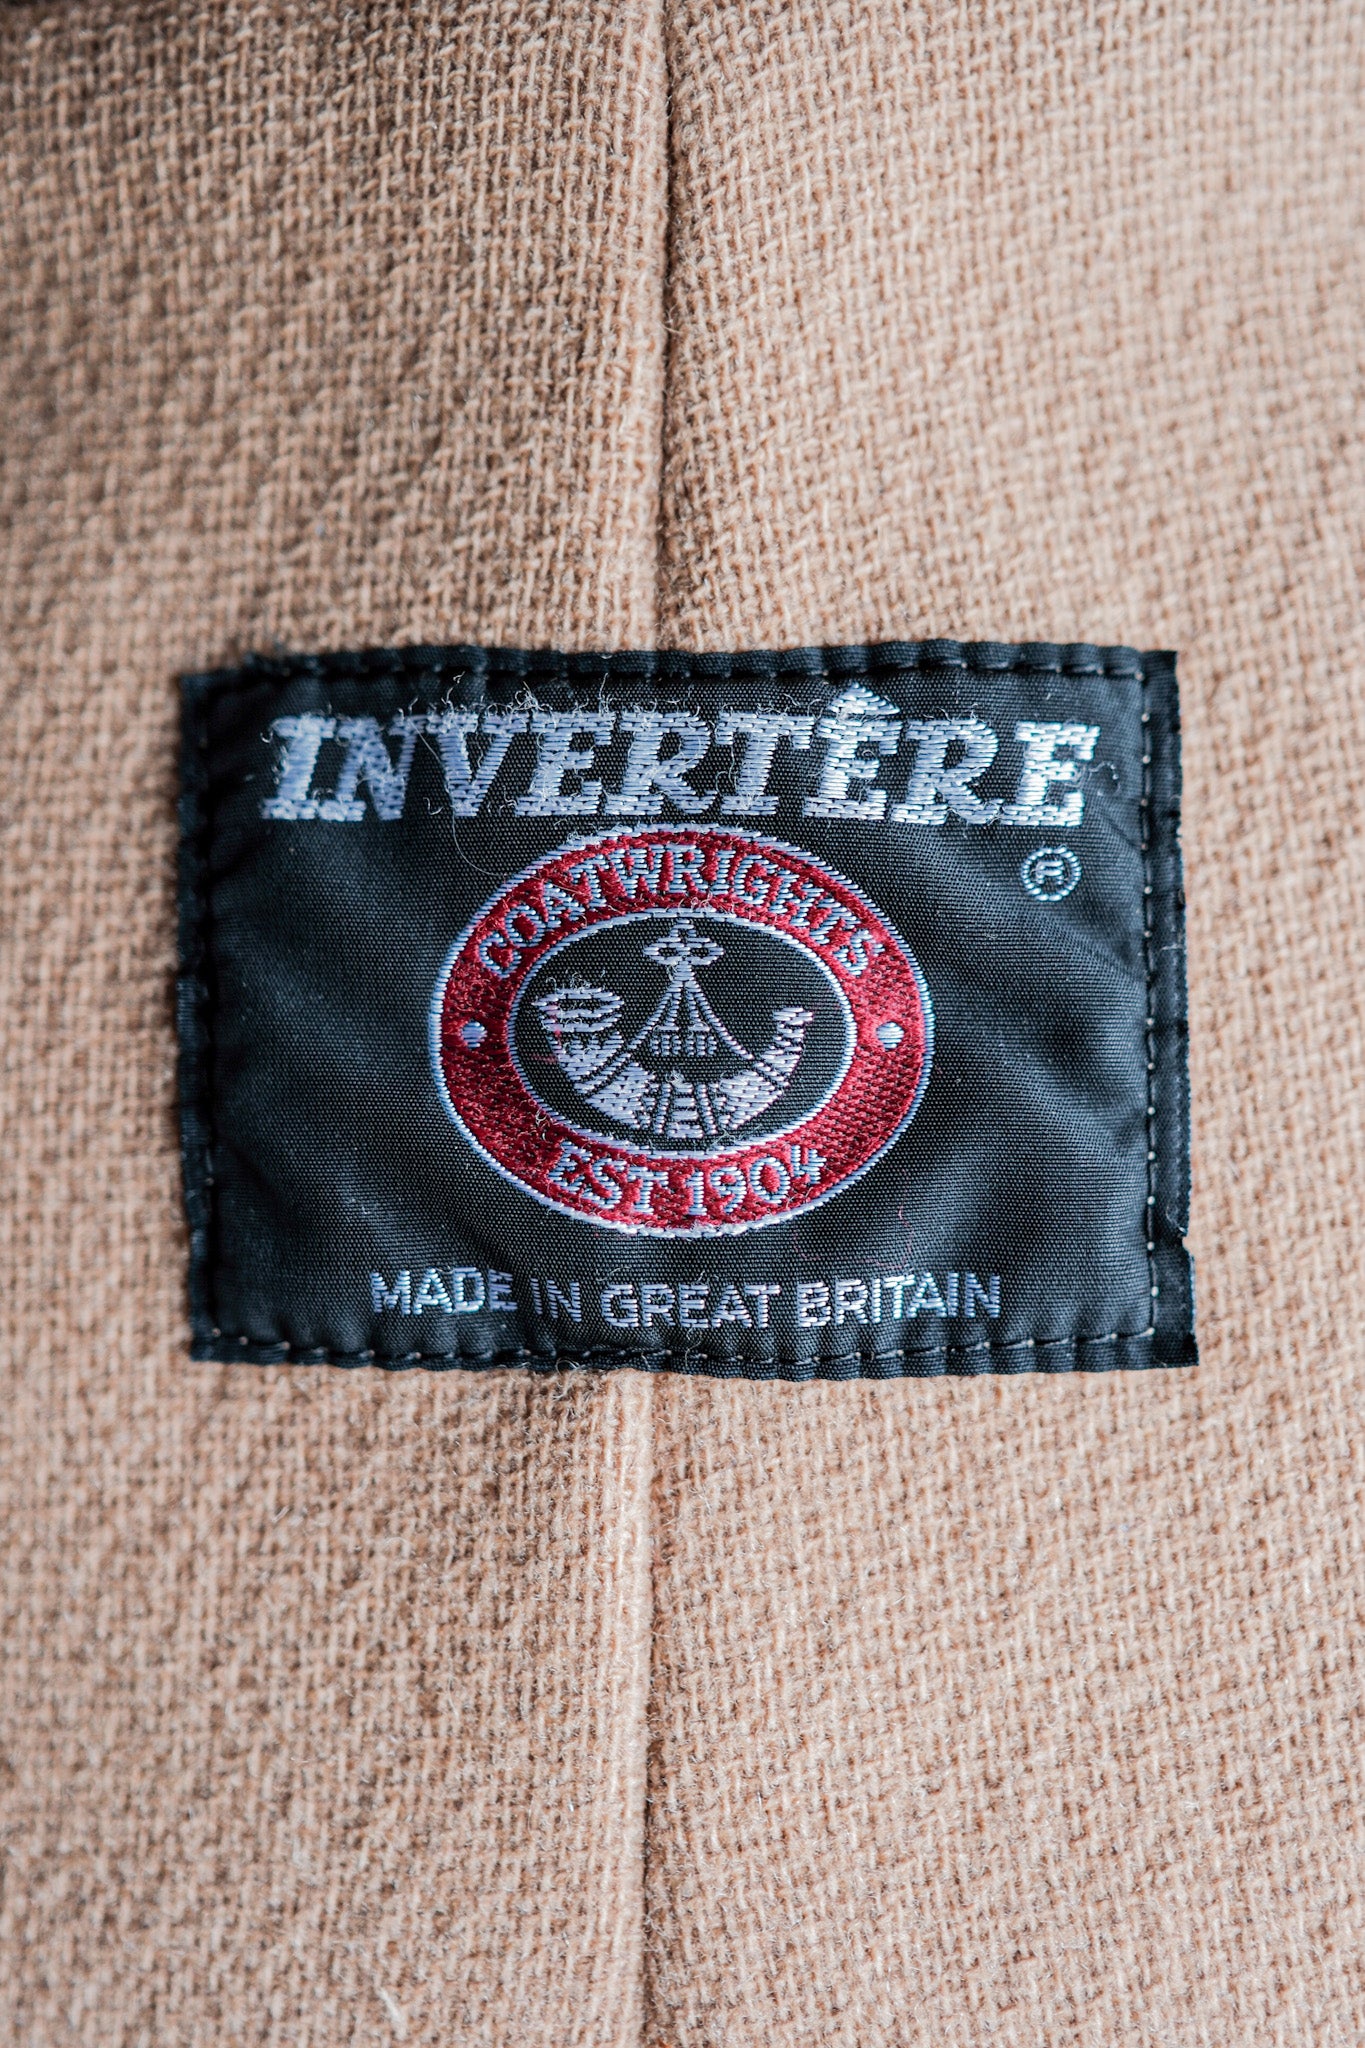 [~ 90's] Old Invertere Wool Duffle Coat "Moorbrook"